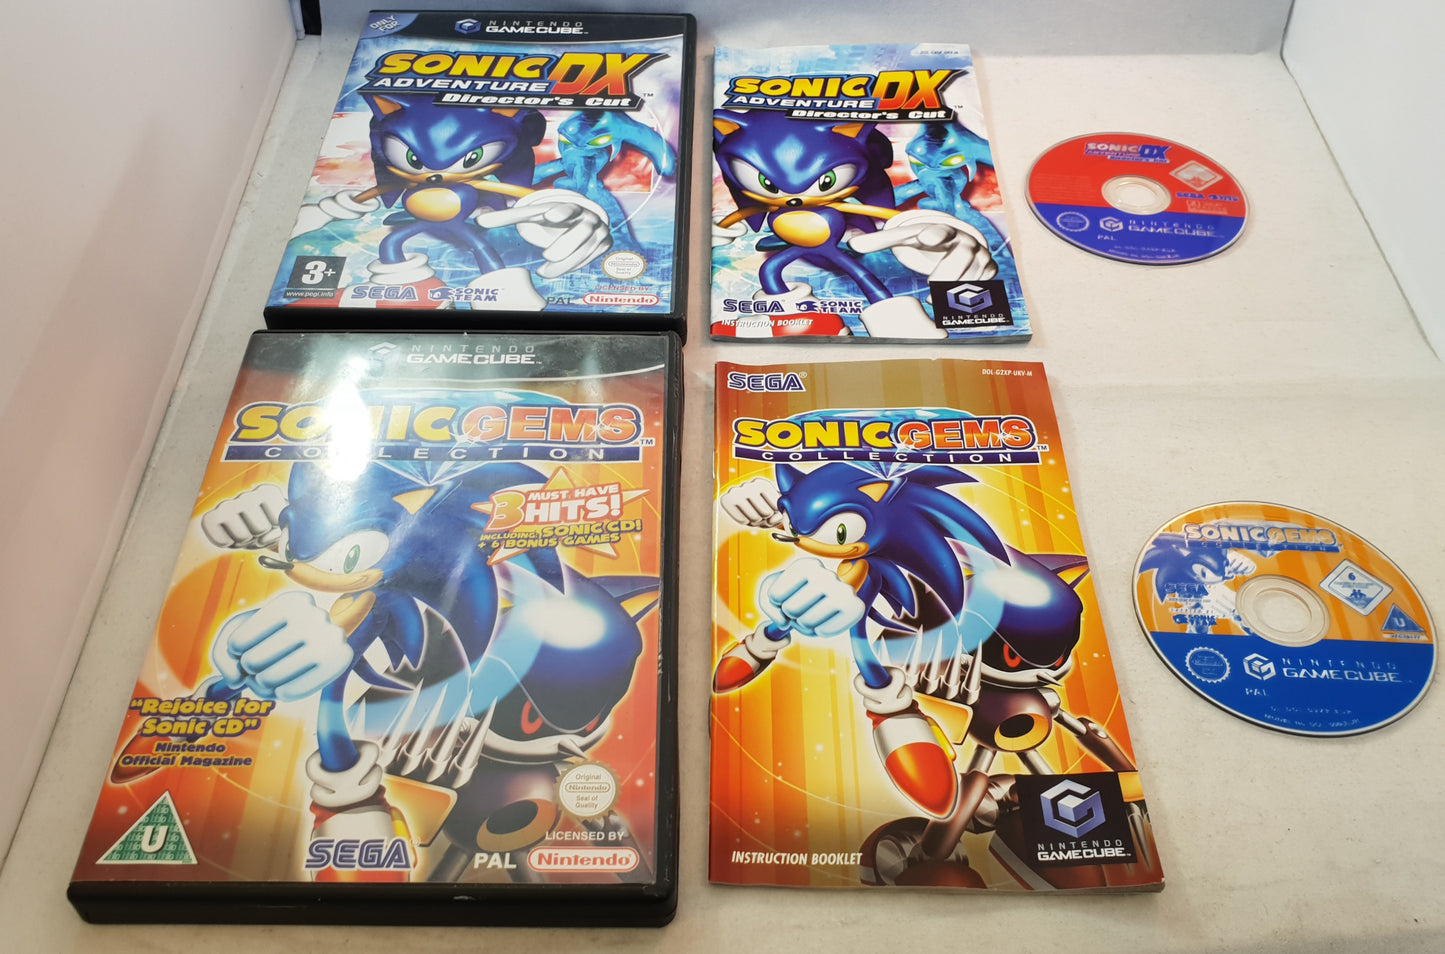 Sonic Adventure DX & Sonic Gems  Collection Nintendo GameCube Game Bundle